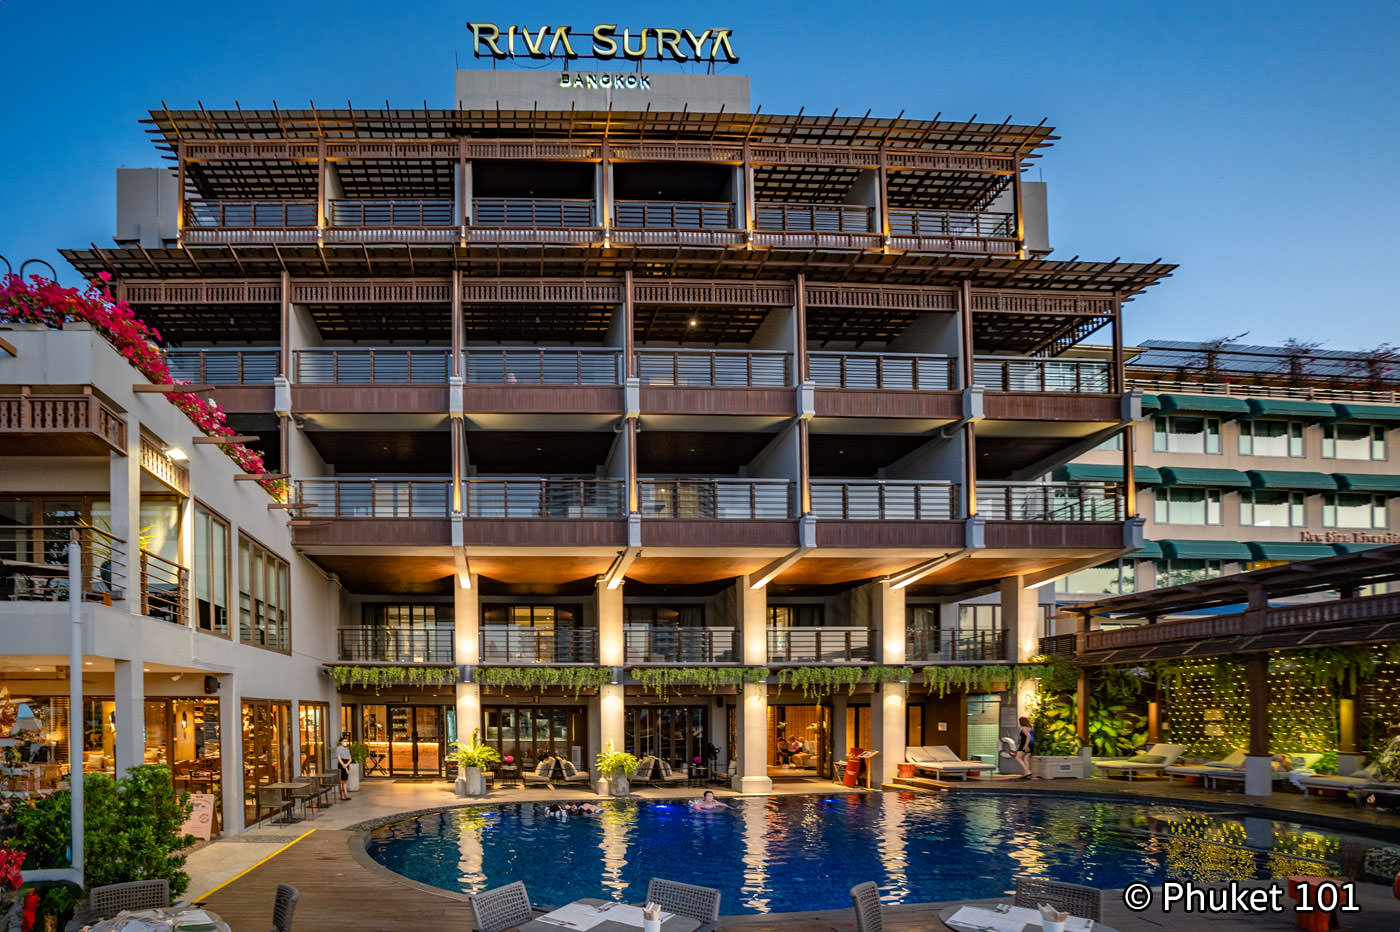 Riva Surya Hotel Bangkok, by the riverside